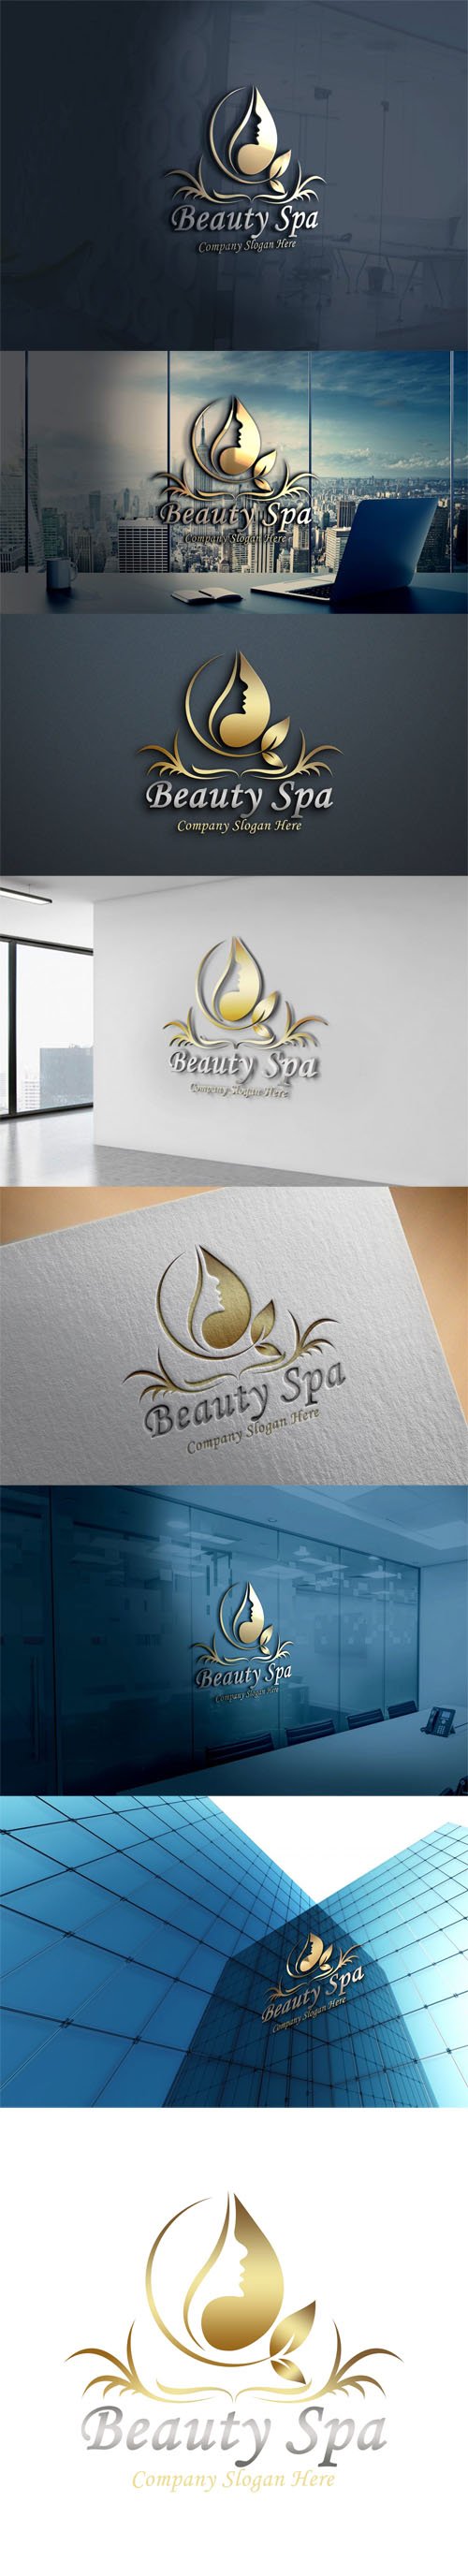 Beauty Spa Logo Design PSD Template